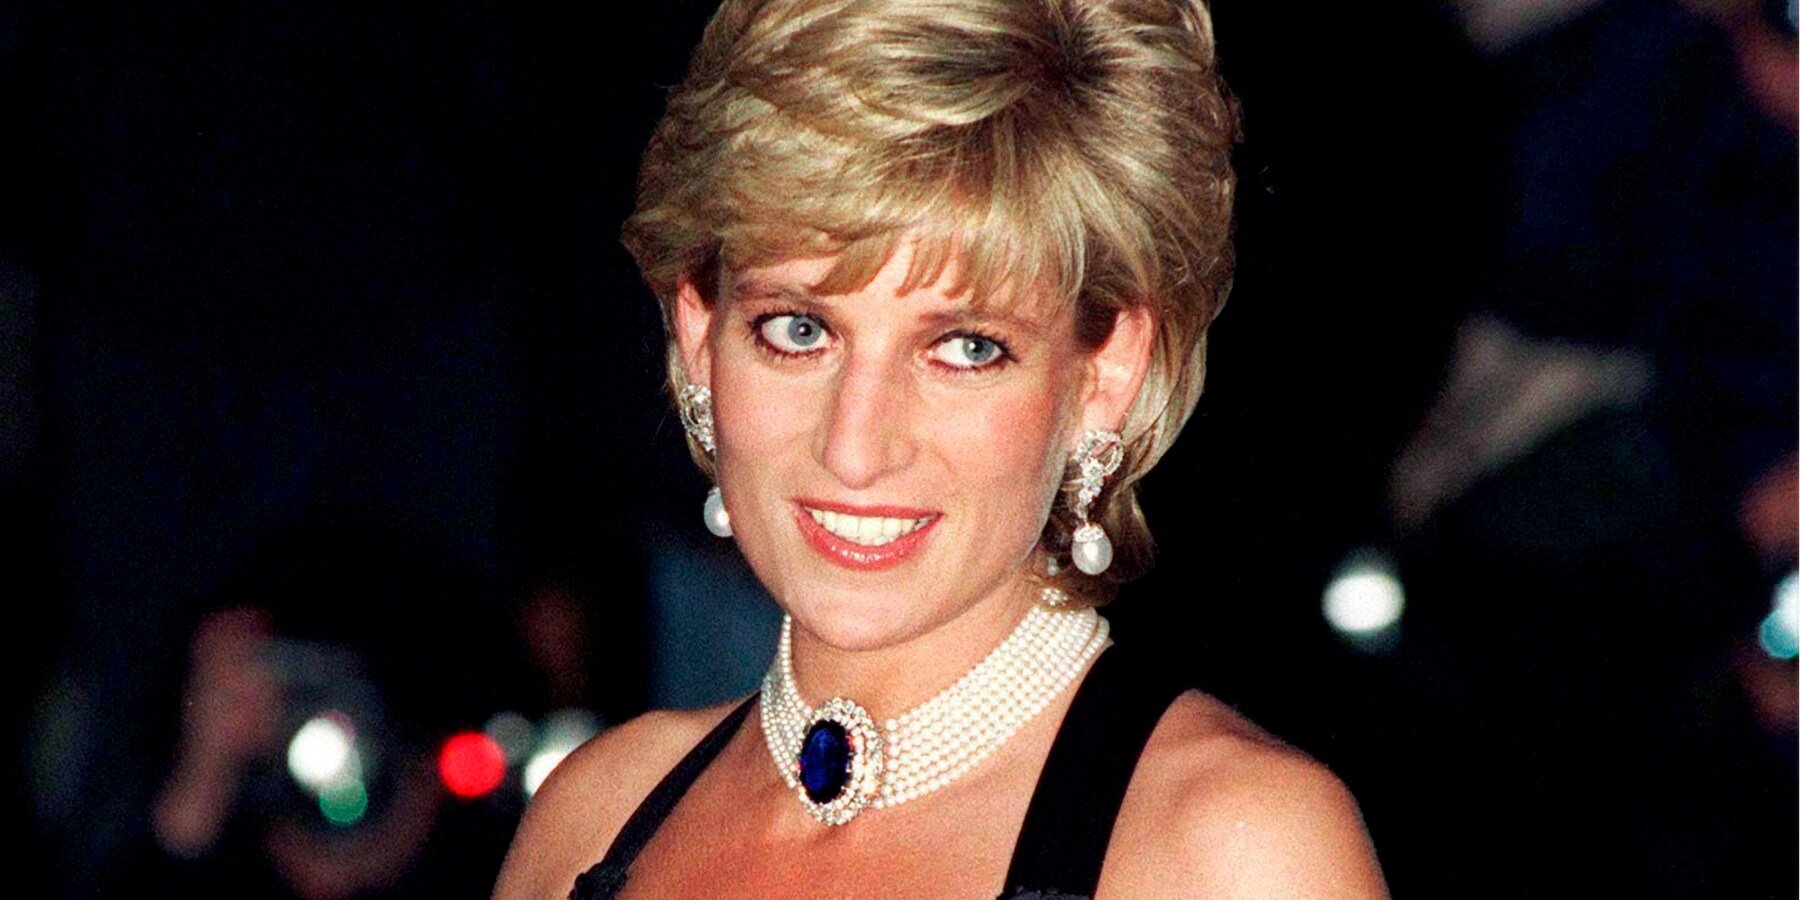 Princess Diana photographed attending a gala